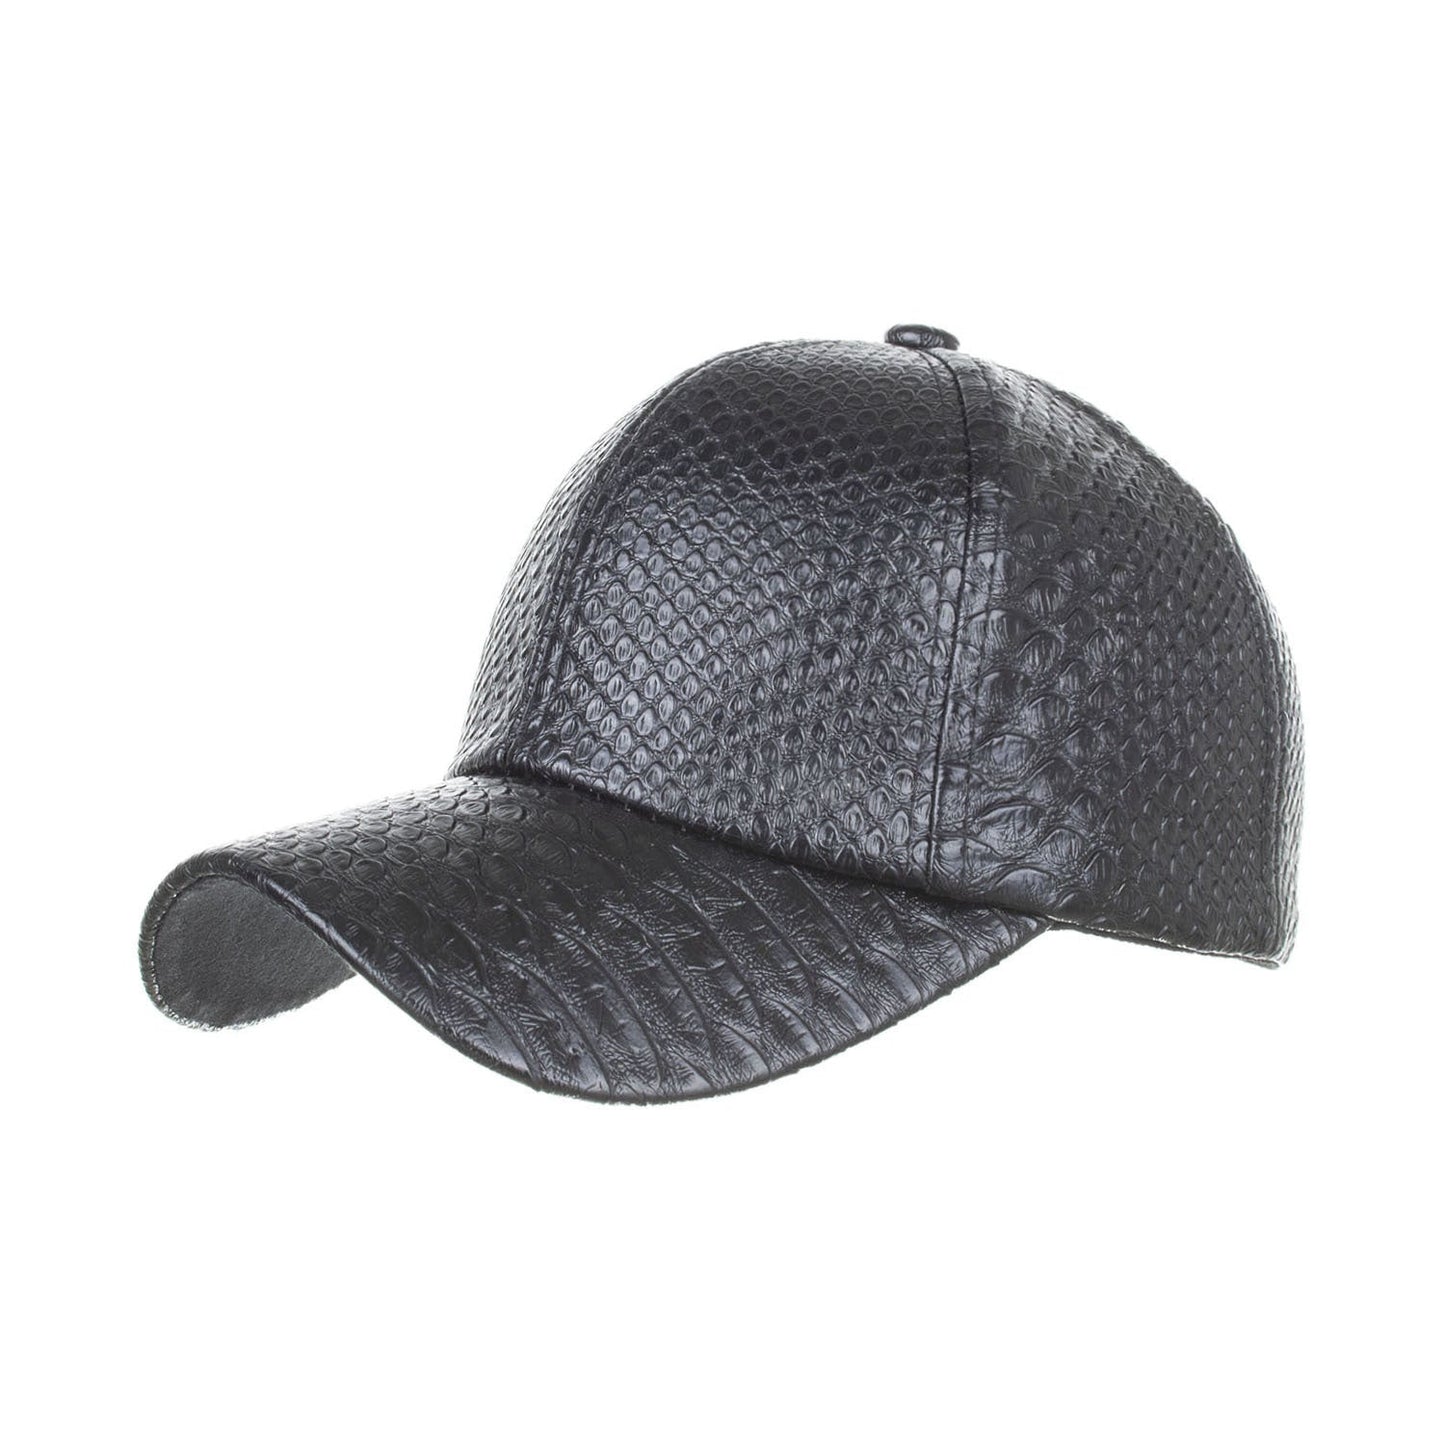 New Fashion PU black Baseball Cap Snapback Cap - Urban Caps